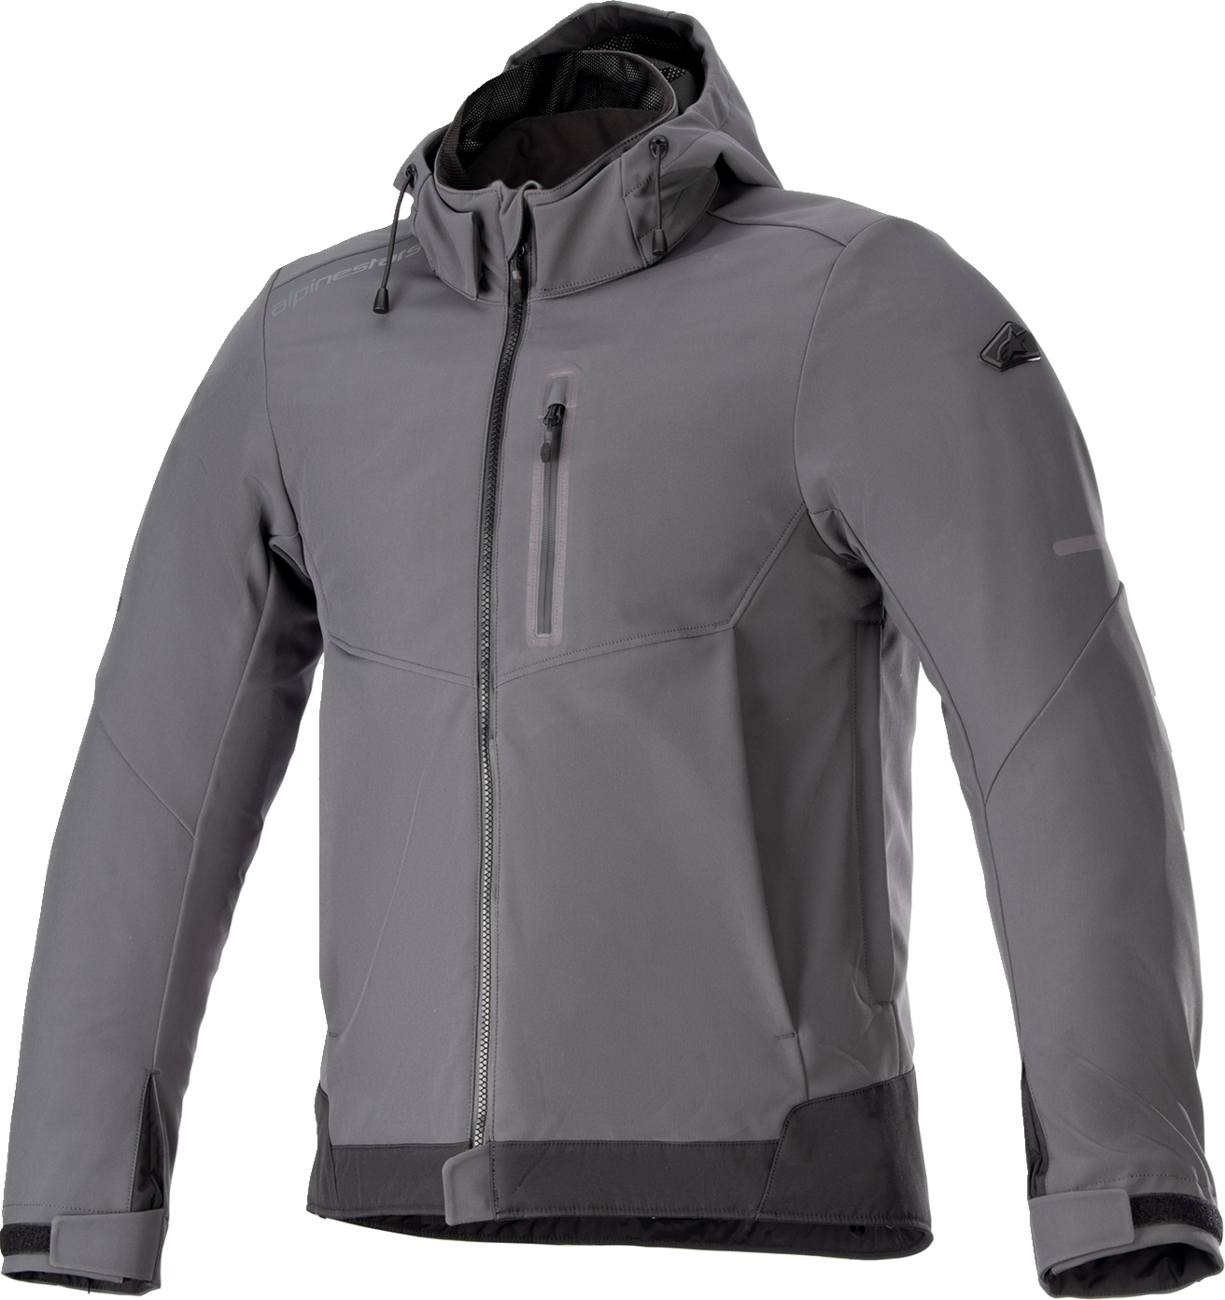 ALPINESTARS Neo Waterproof Jacket - Gray/Black - Large 4208023-9610-L